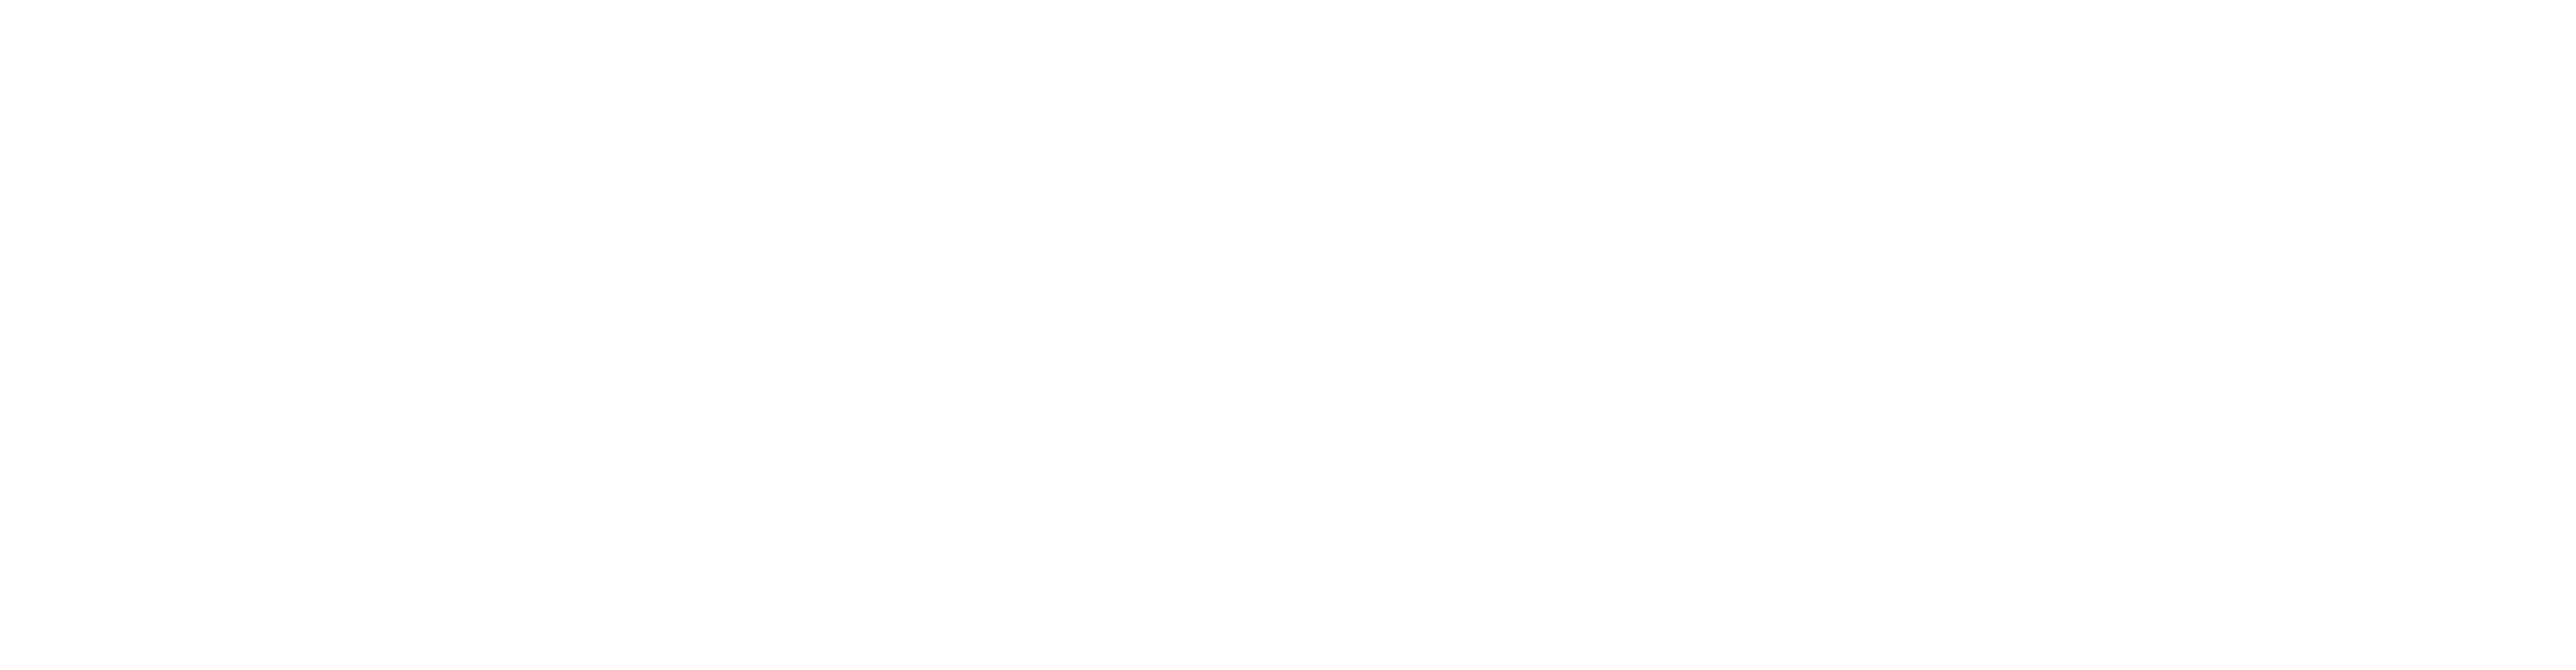 University of Illinois Urbana-Champaign logo